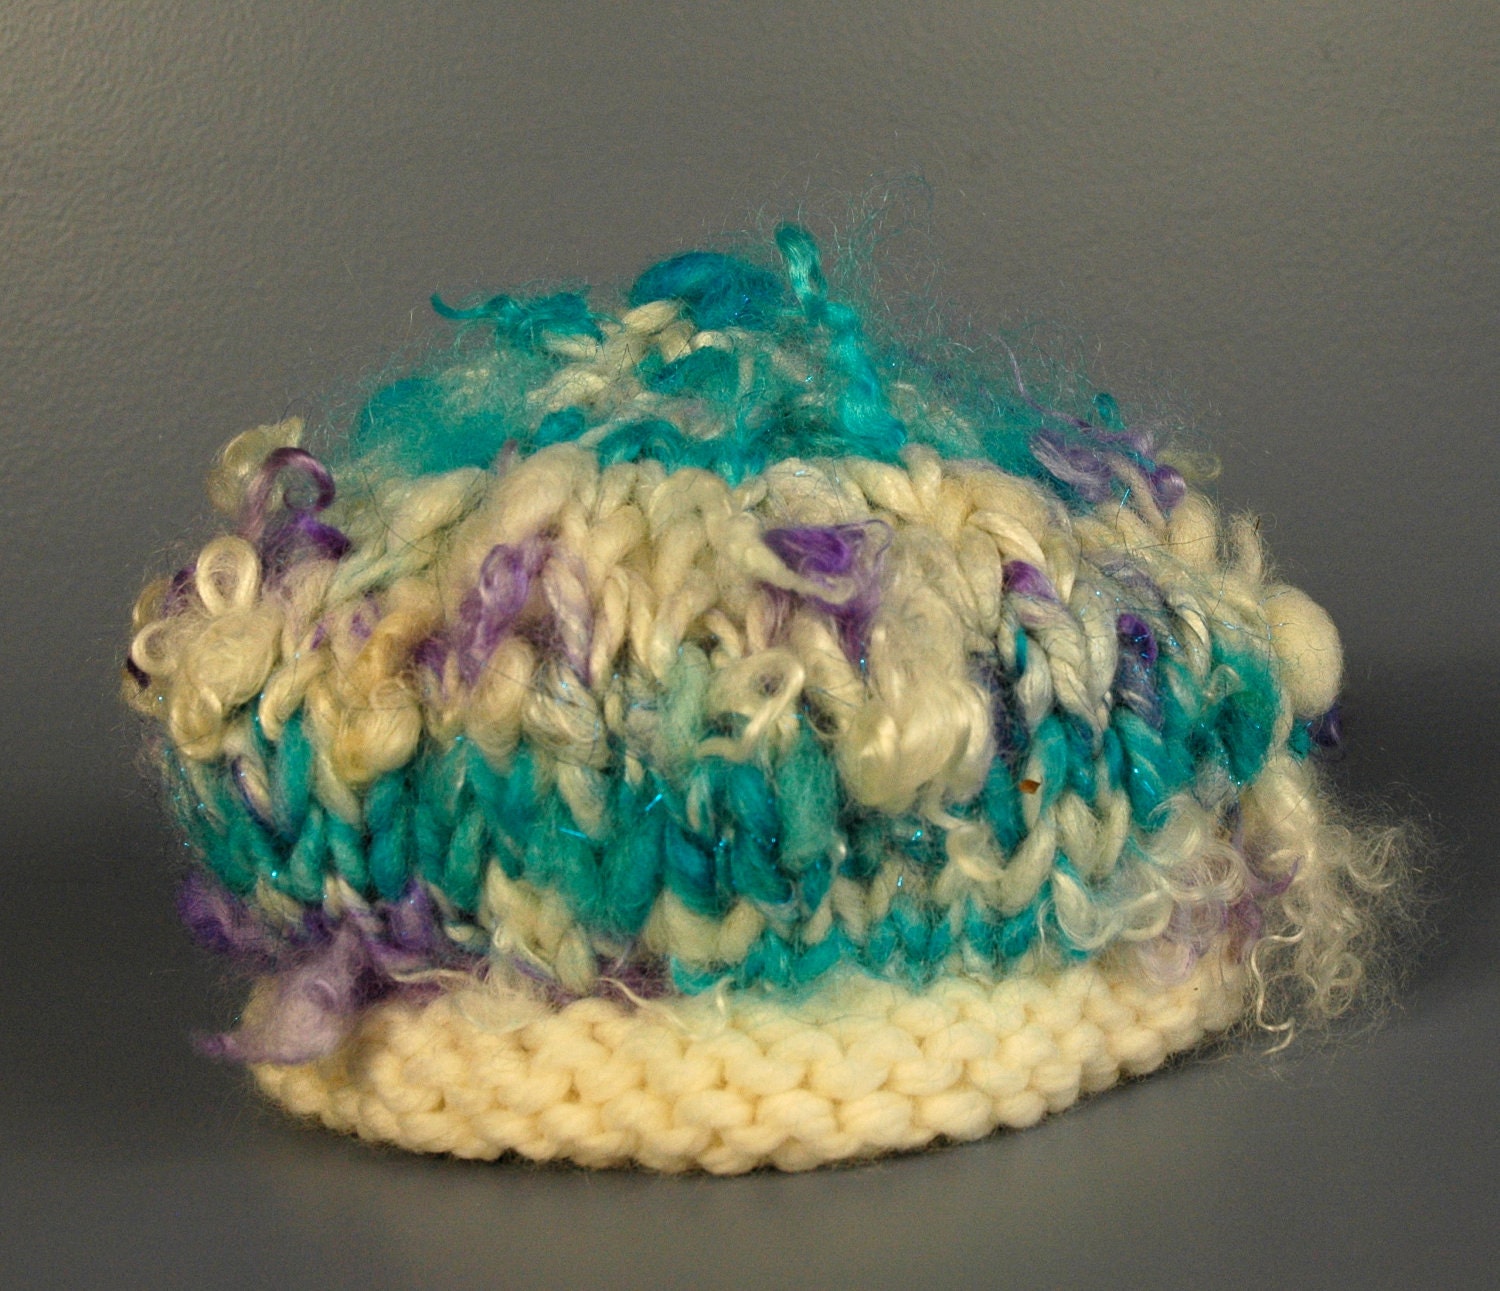 A Mermaids Hat. Hand Knit Colorful Art Yarn